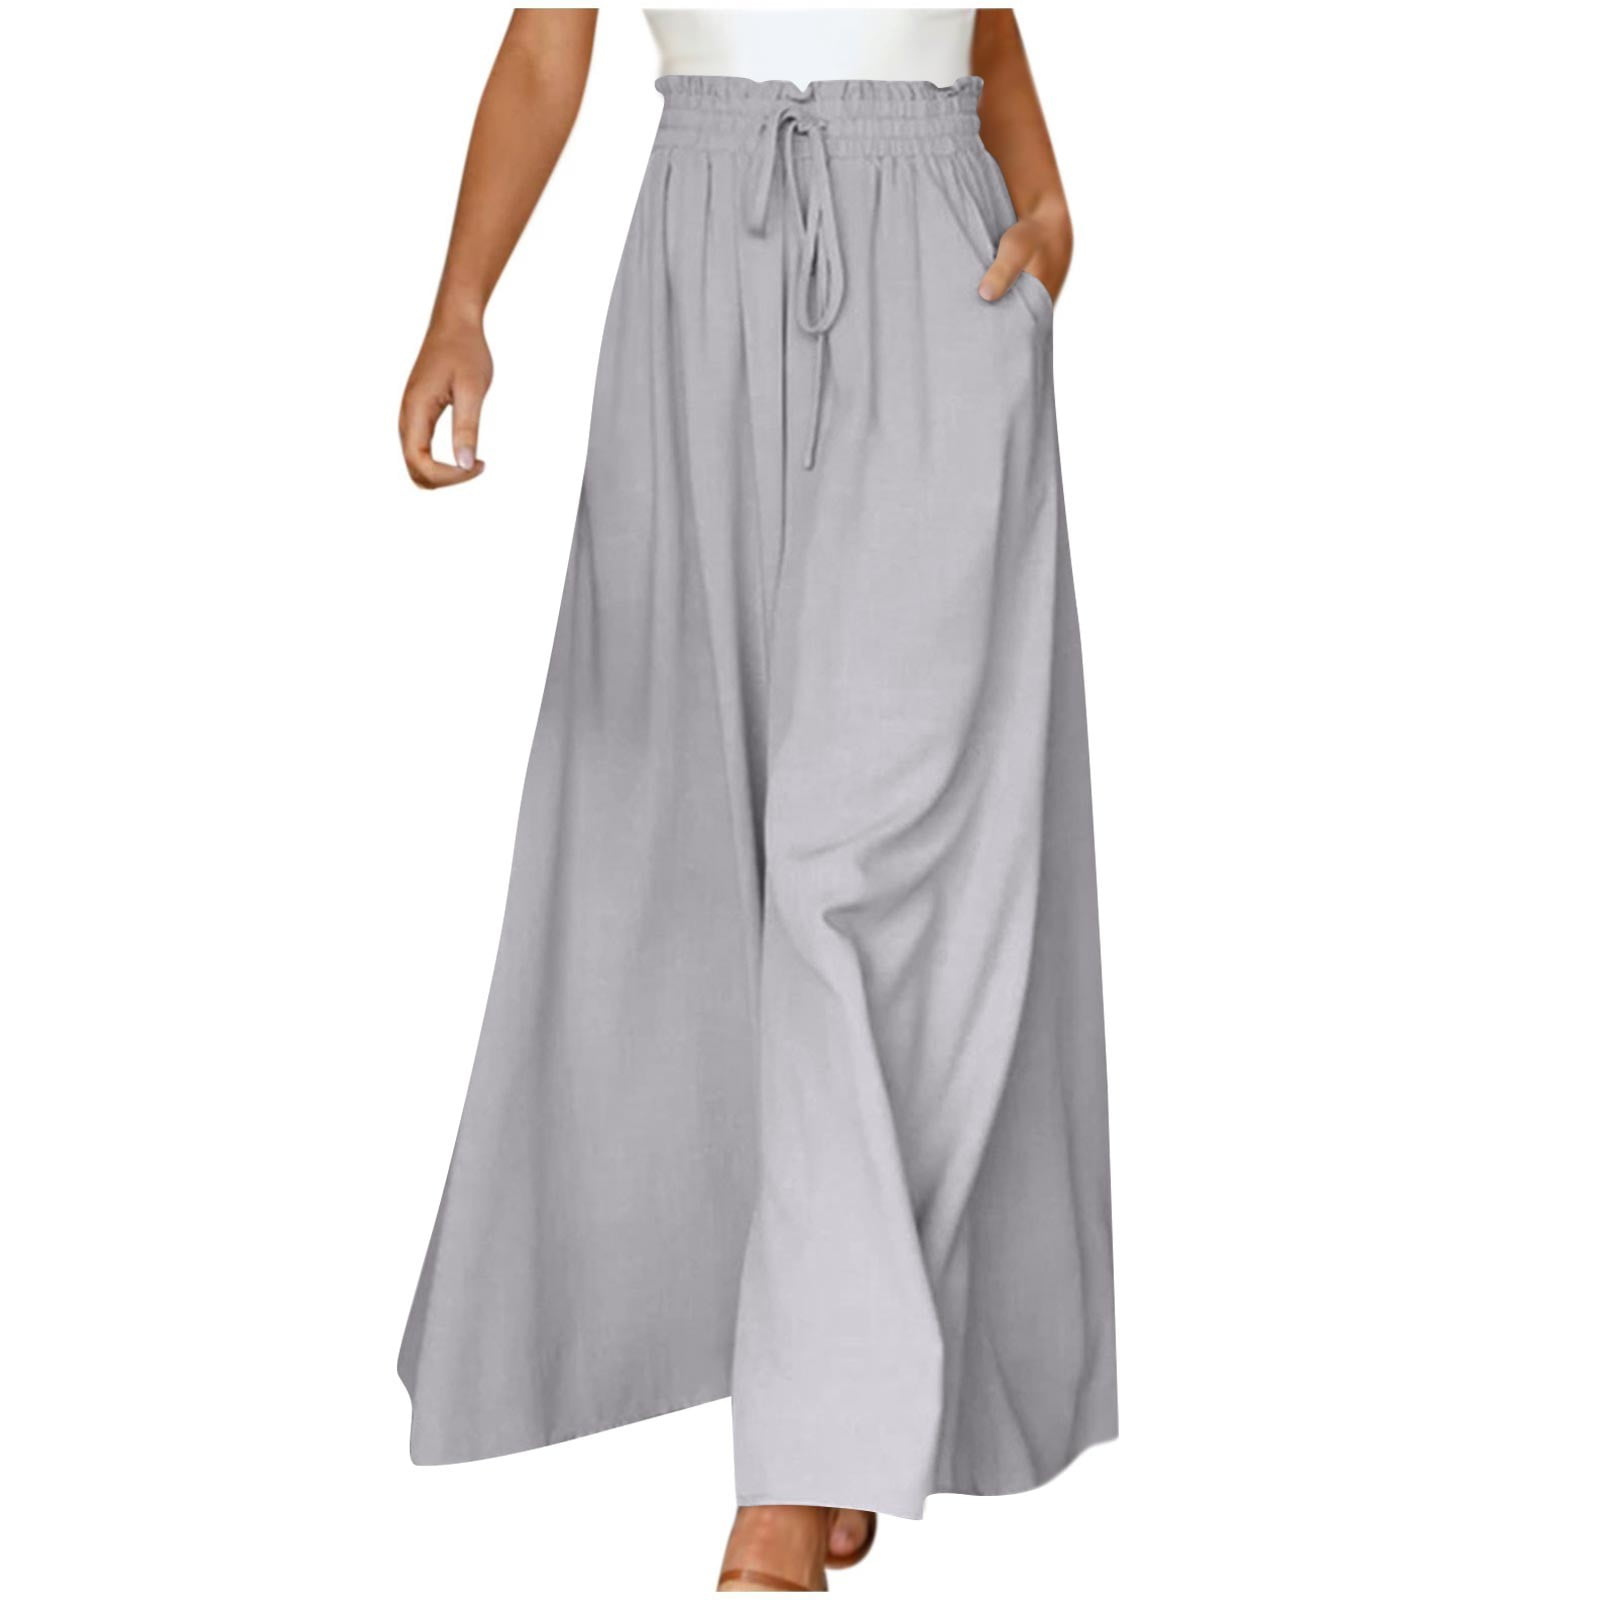 ZXHACSJ Women's Solid Color Trousers Elastic Belt Wide Leg High Waist Long  Culottes Gray M